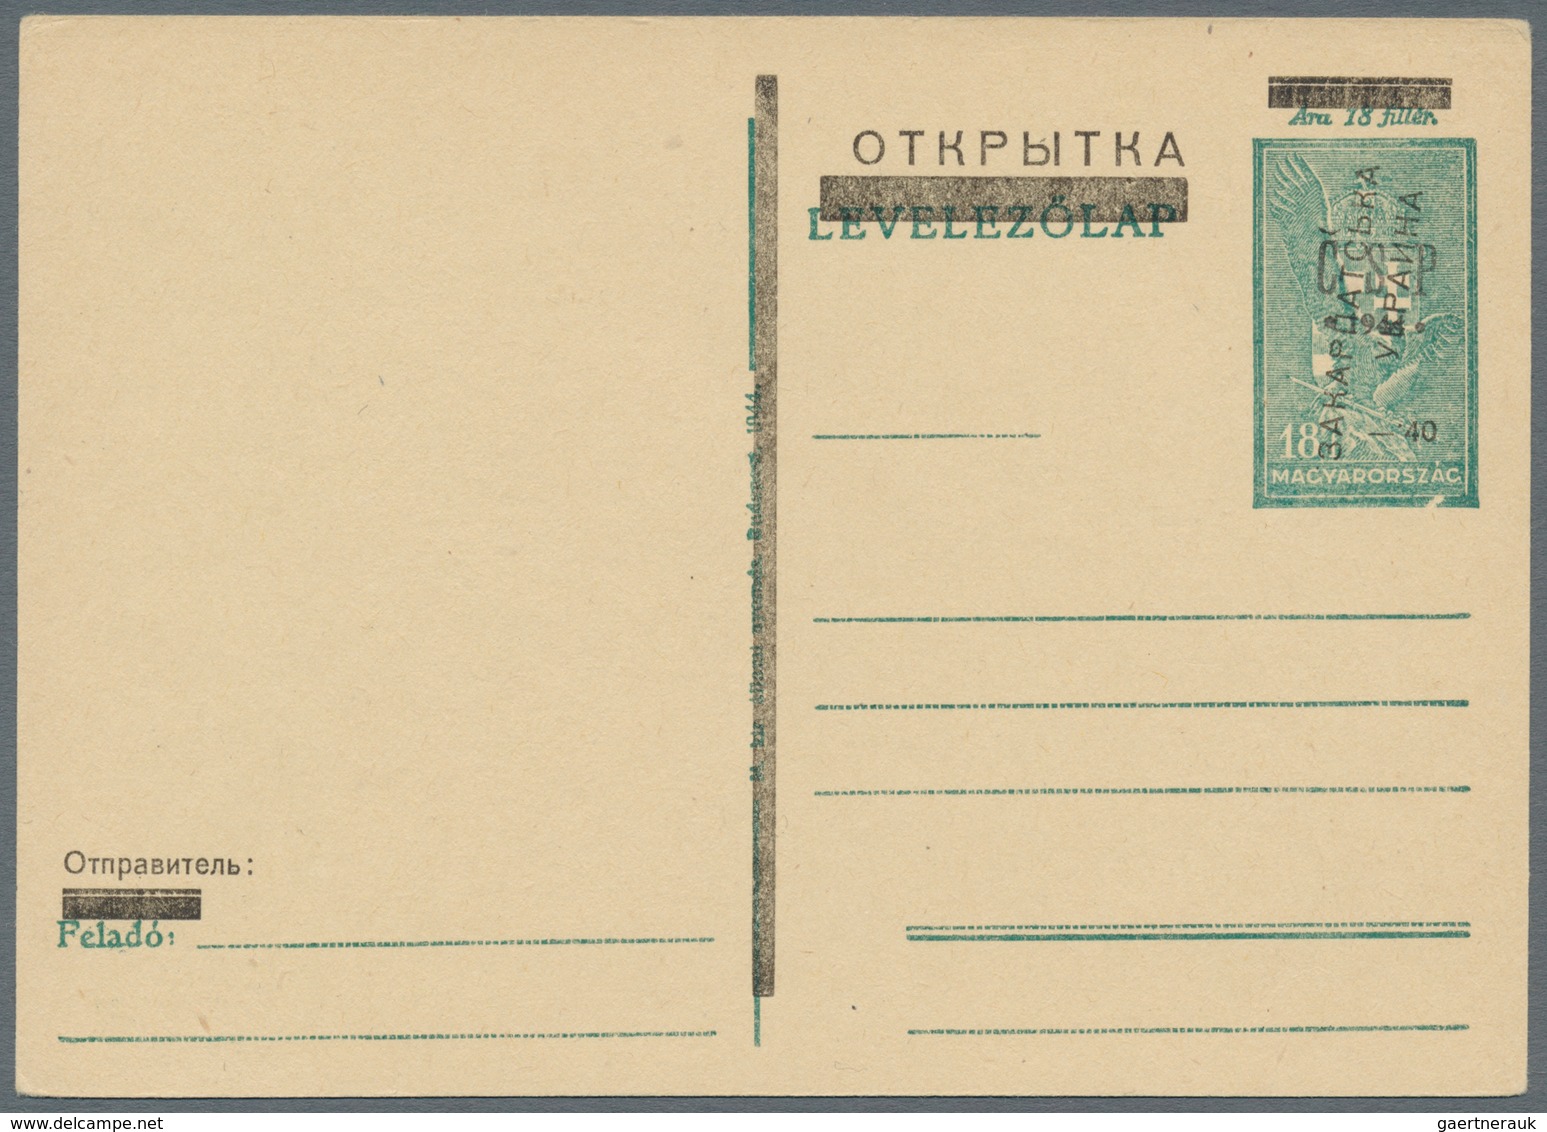 Karpaten-Ukraine: 1945, -,40 On 18 F. Postal Stationery Card (new Overprint In Black On Chuster Issu - Ukraine